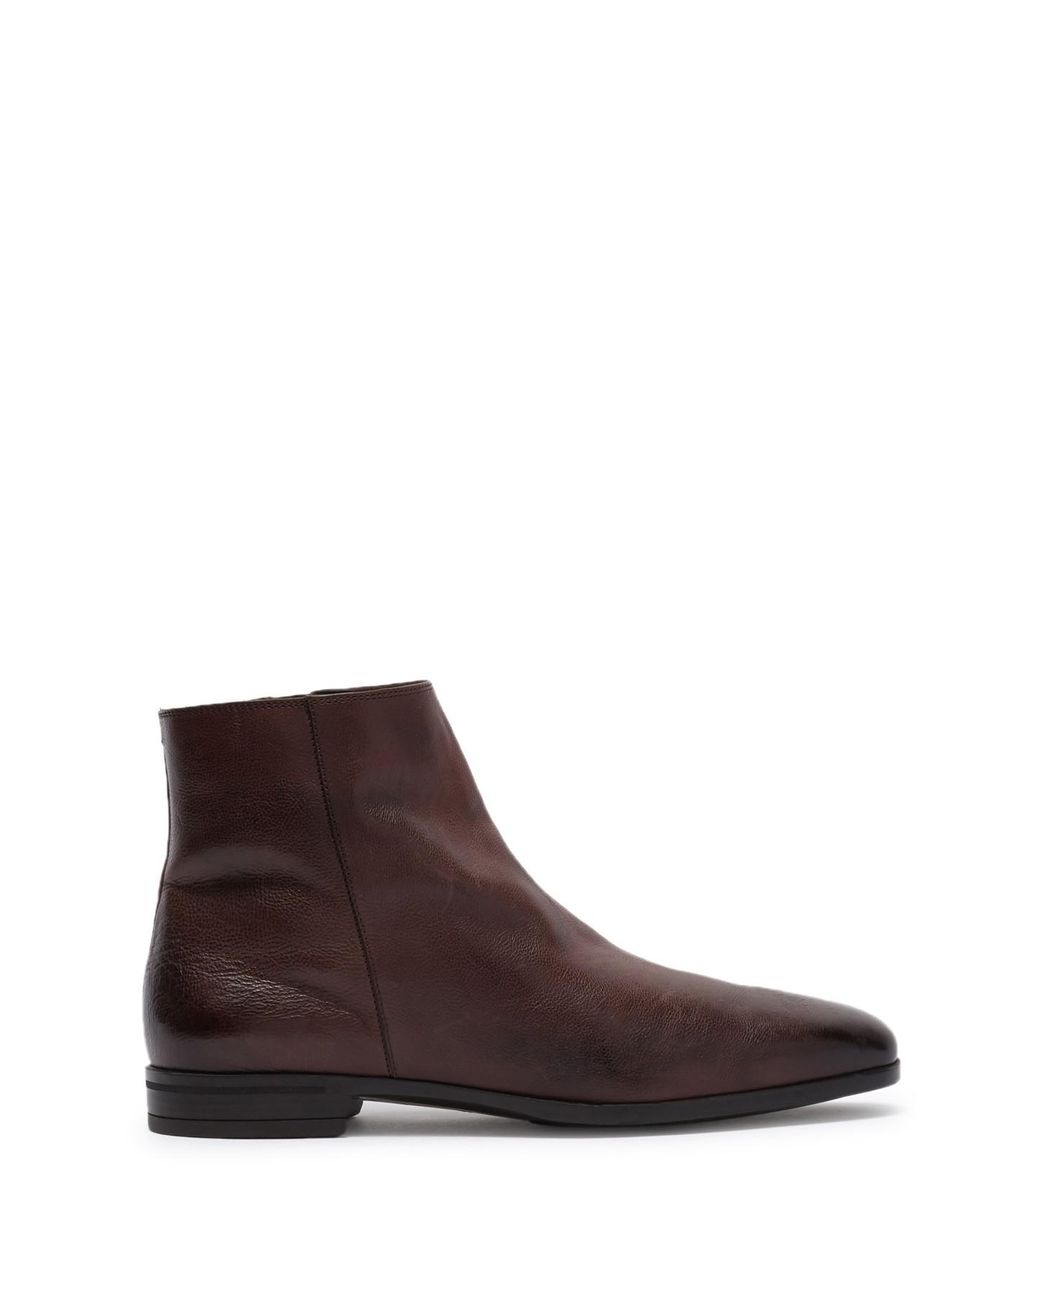 BOSS by HUGO BOSS Kensington Leather Zip Ankle Boot in Brown for Men | Lyst